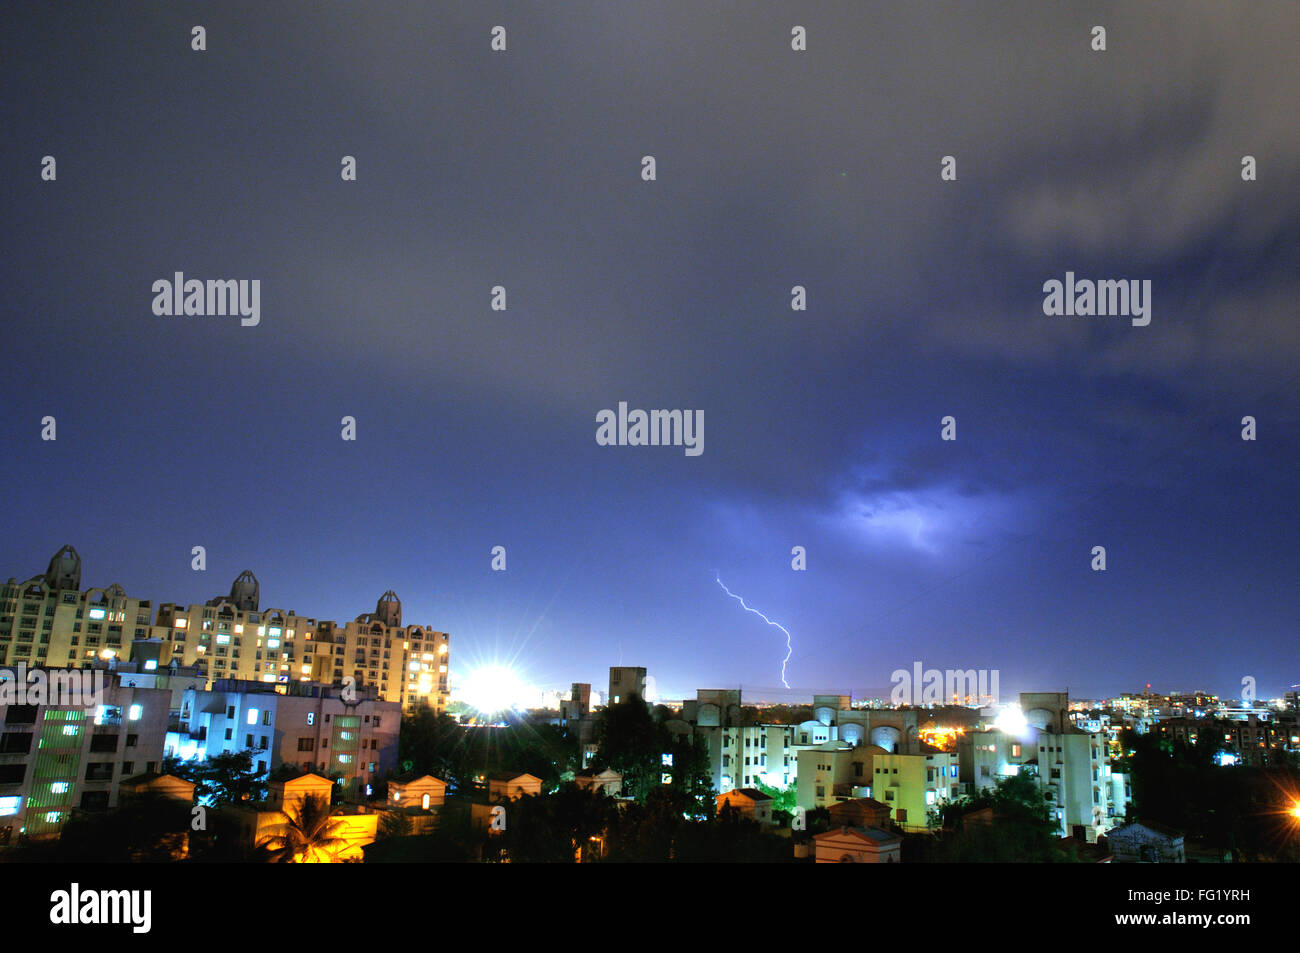 Cityscape lit up by lightning in night Pune ; Maharashtra ; India 9 April 2008 Stock Photo